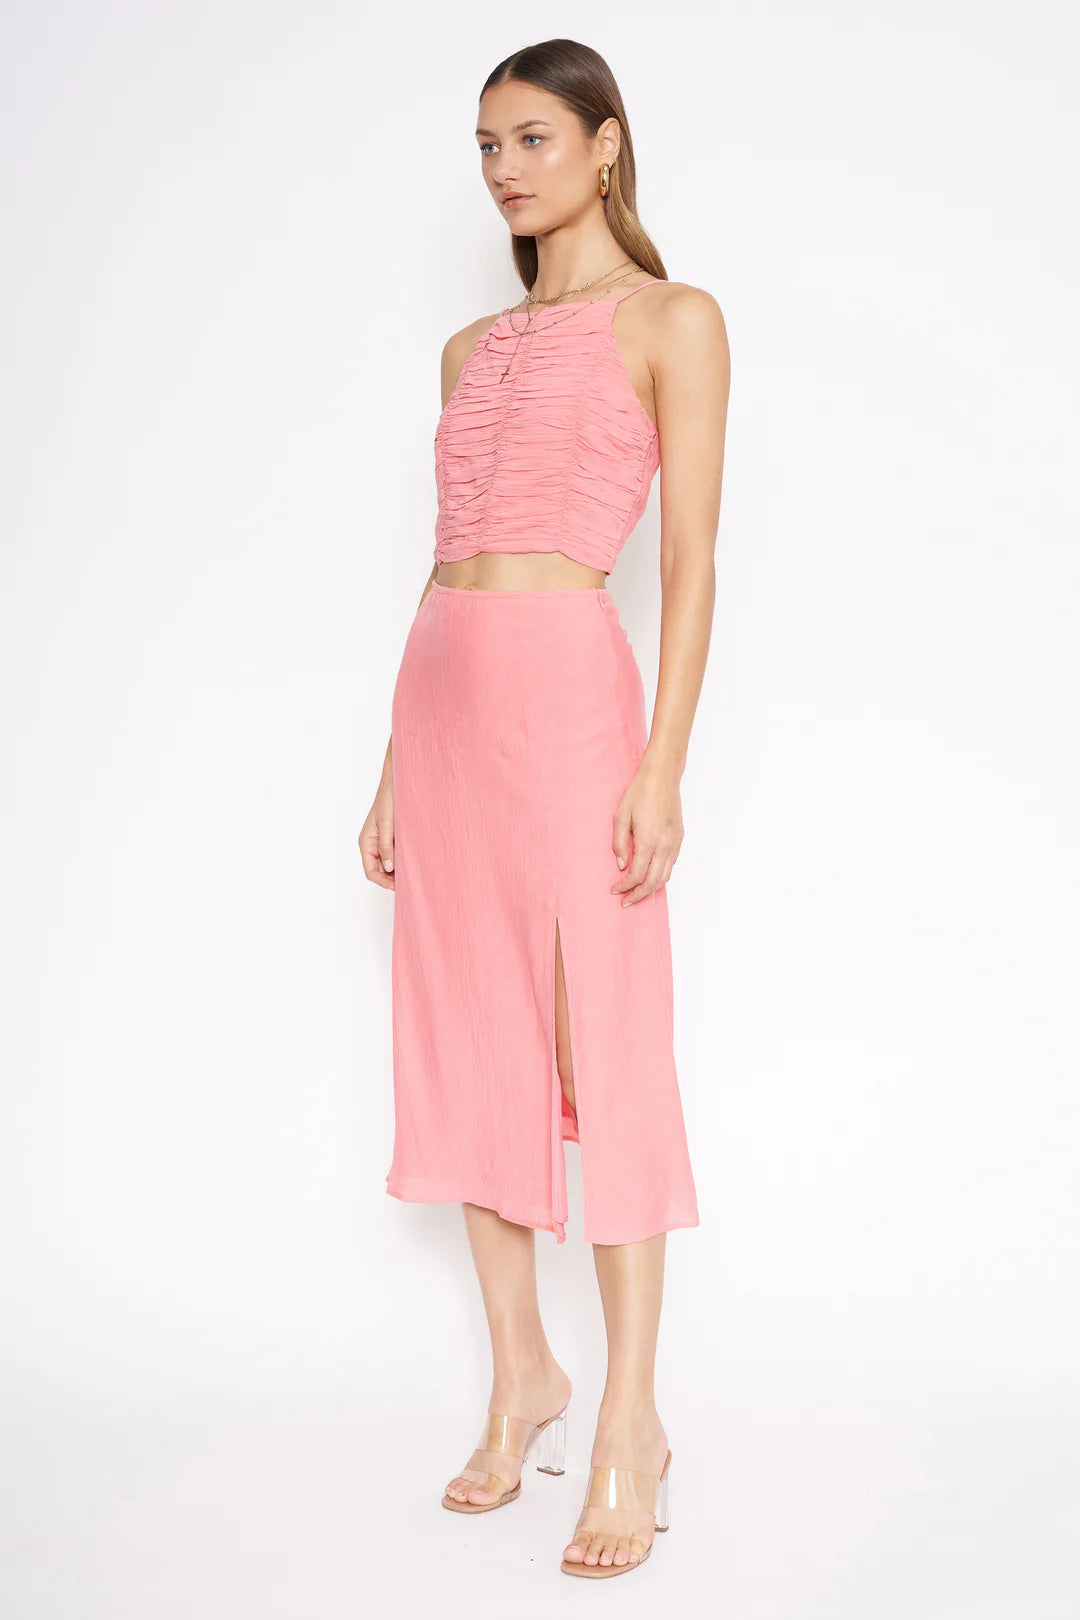 Flamingo Pink Midi Skirt